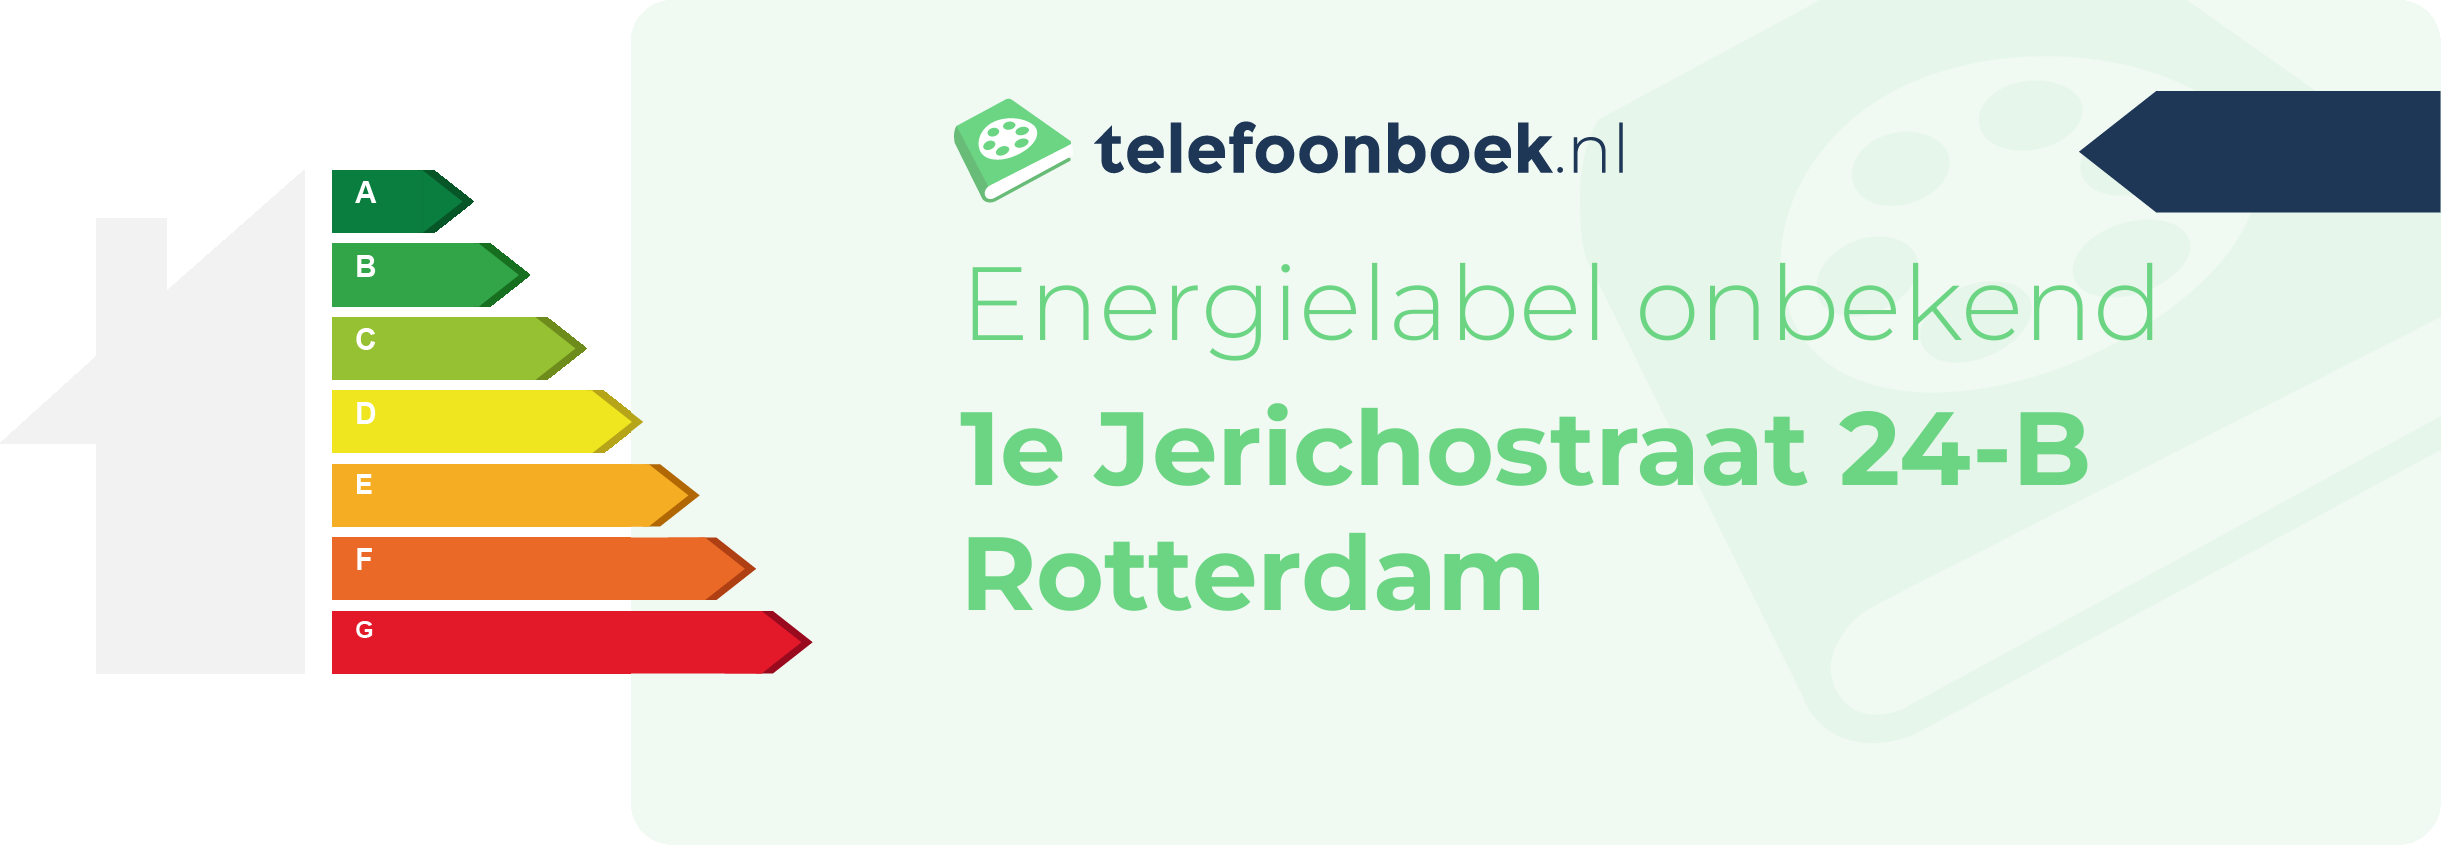 Energielabel 1e Jerichostraat 24-B Rotterdam